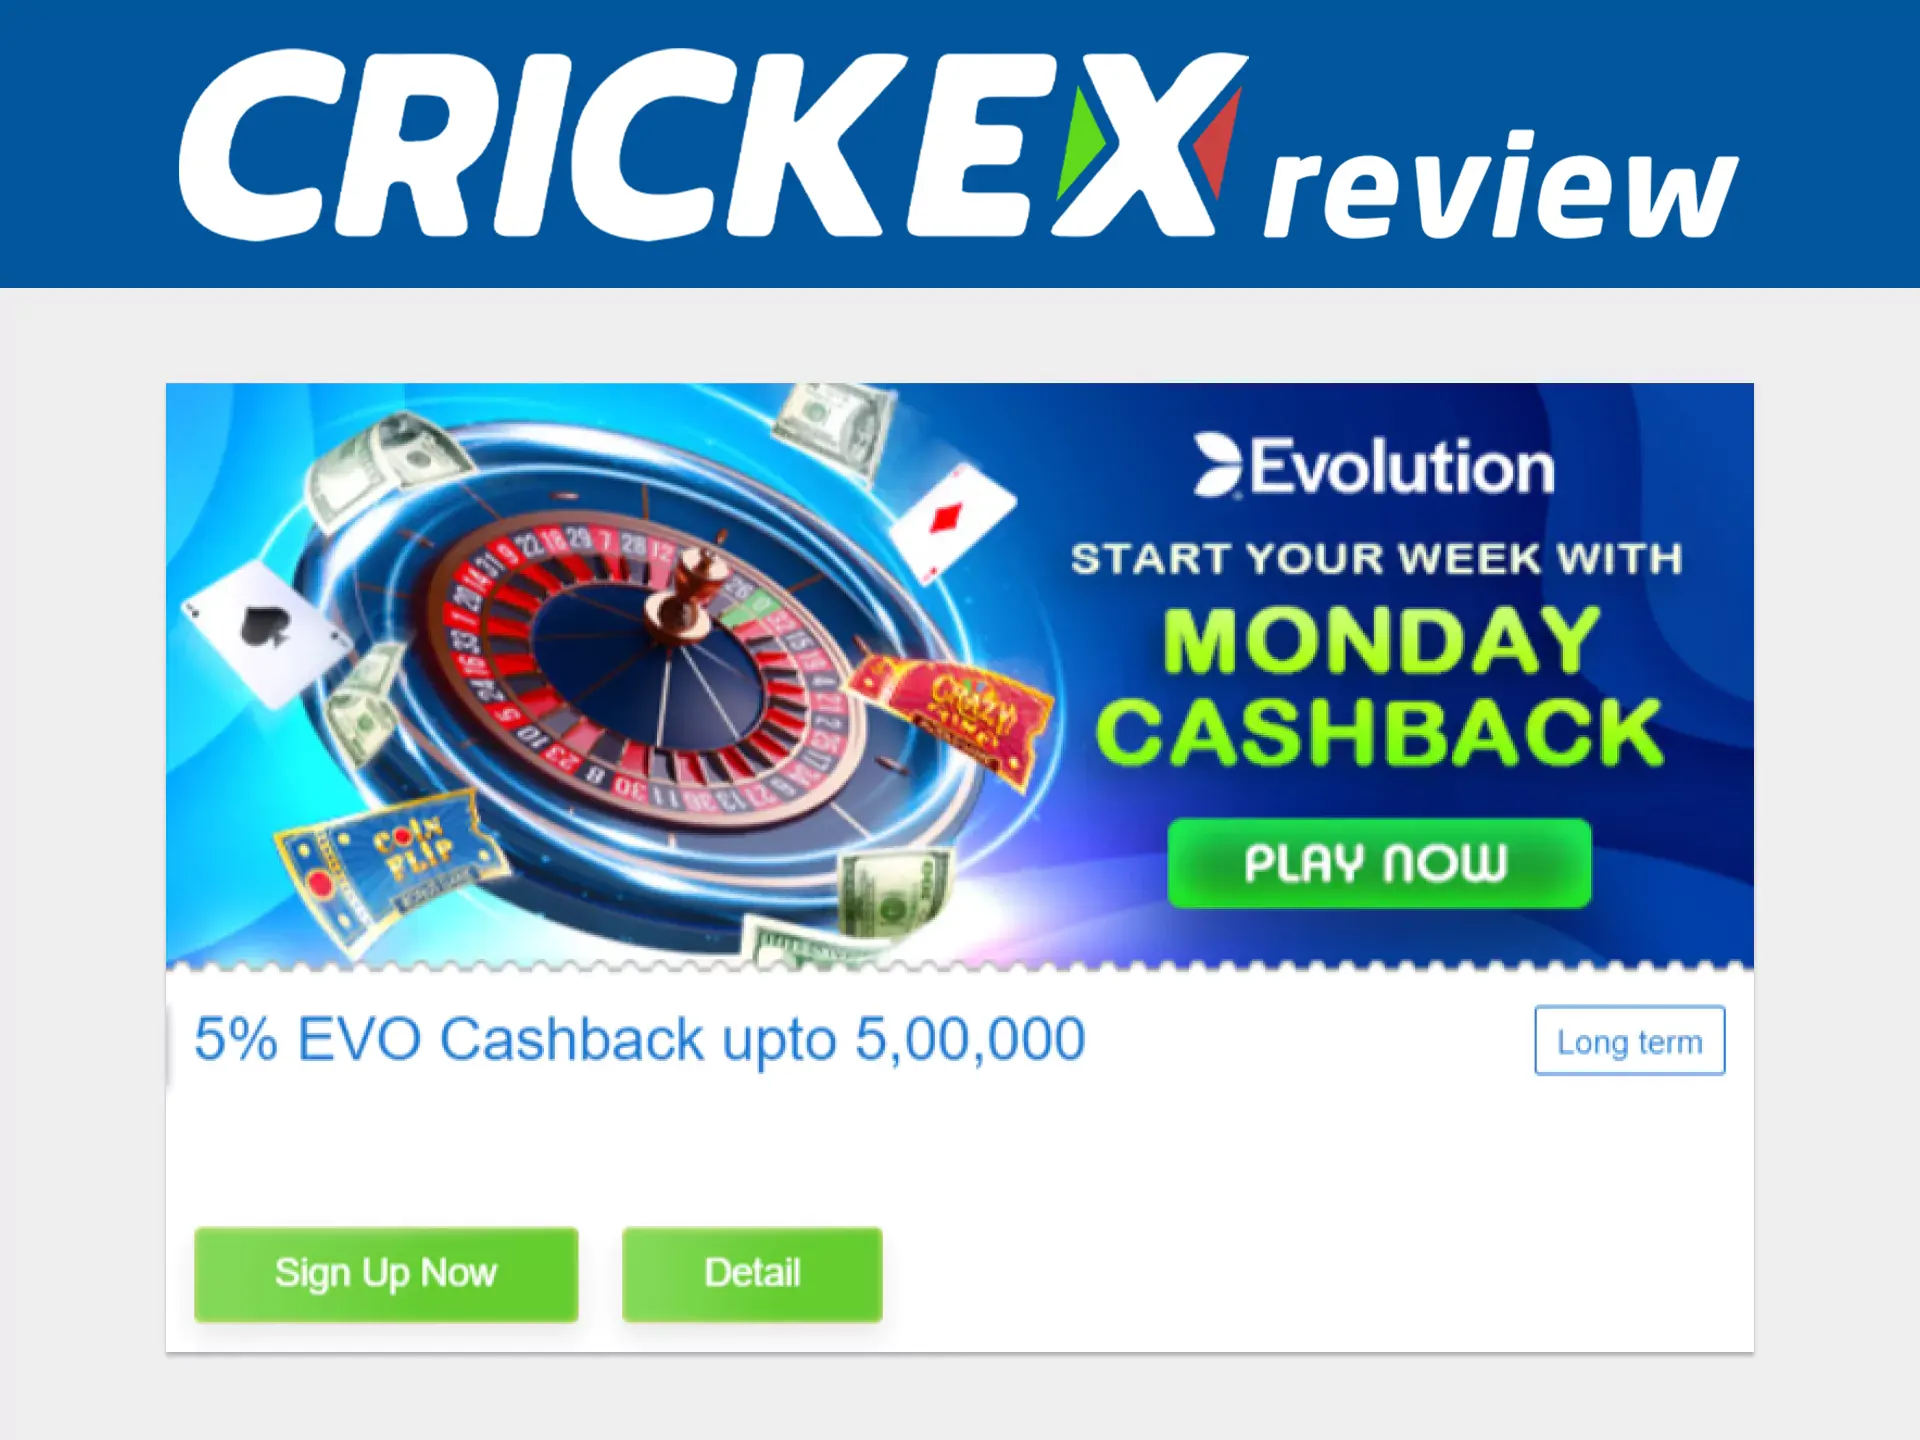 Get cashback bonus from Crickex.